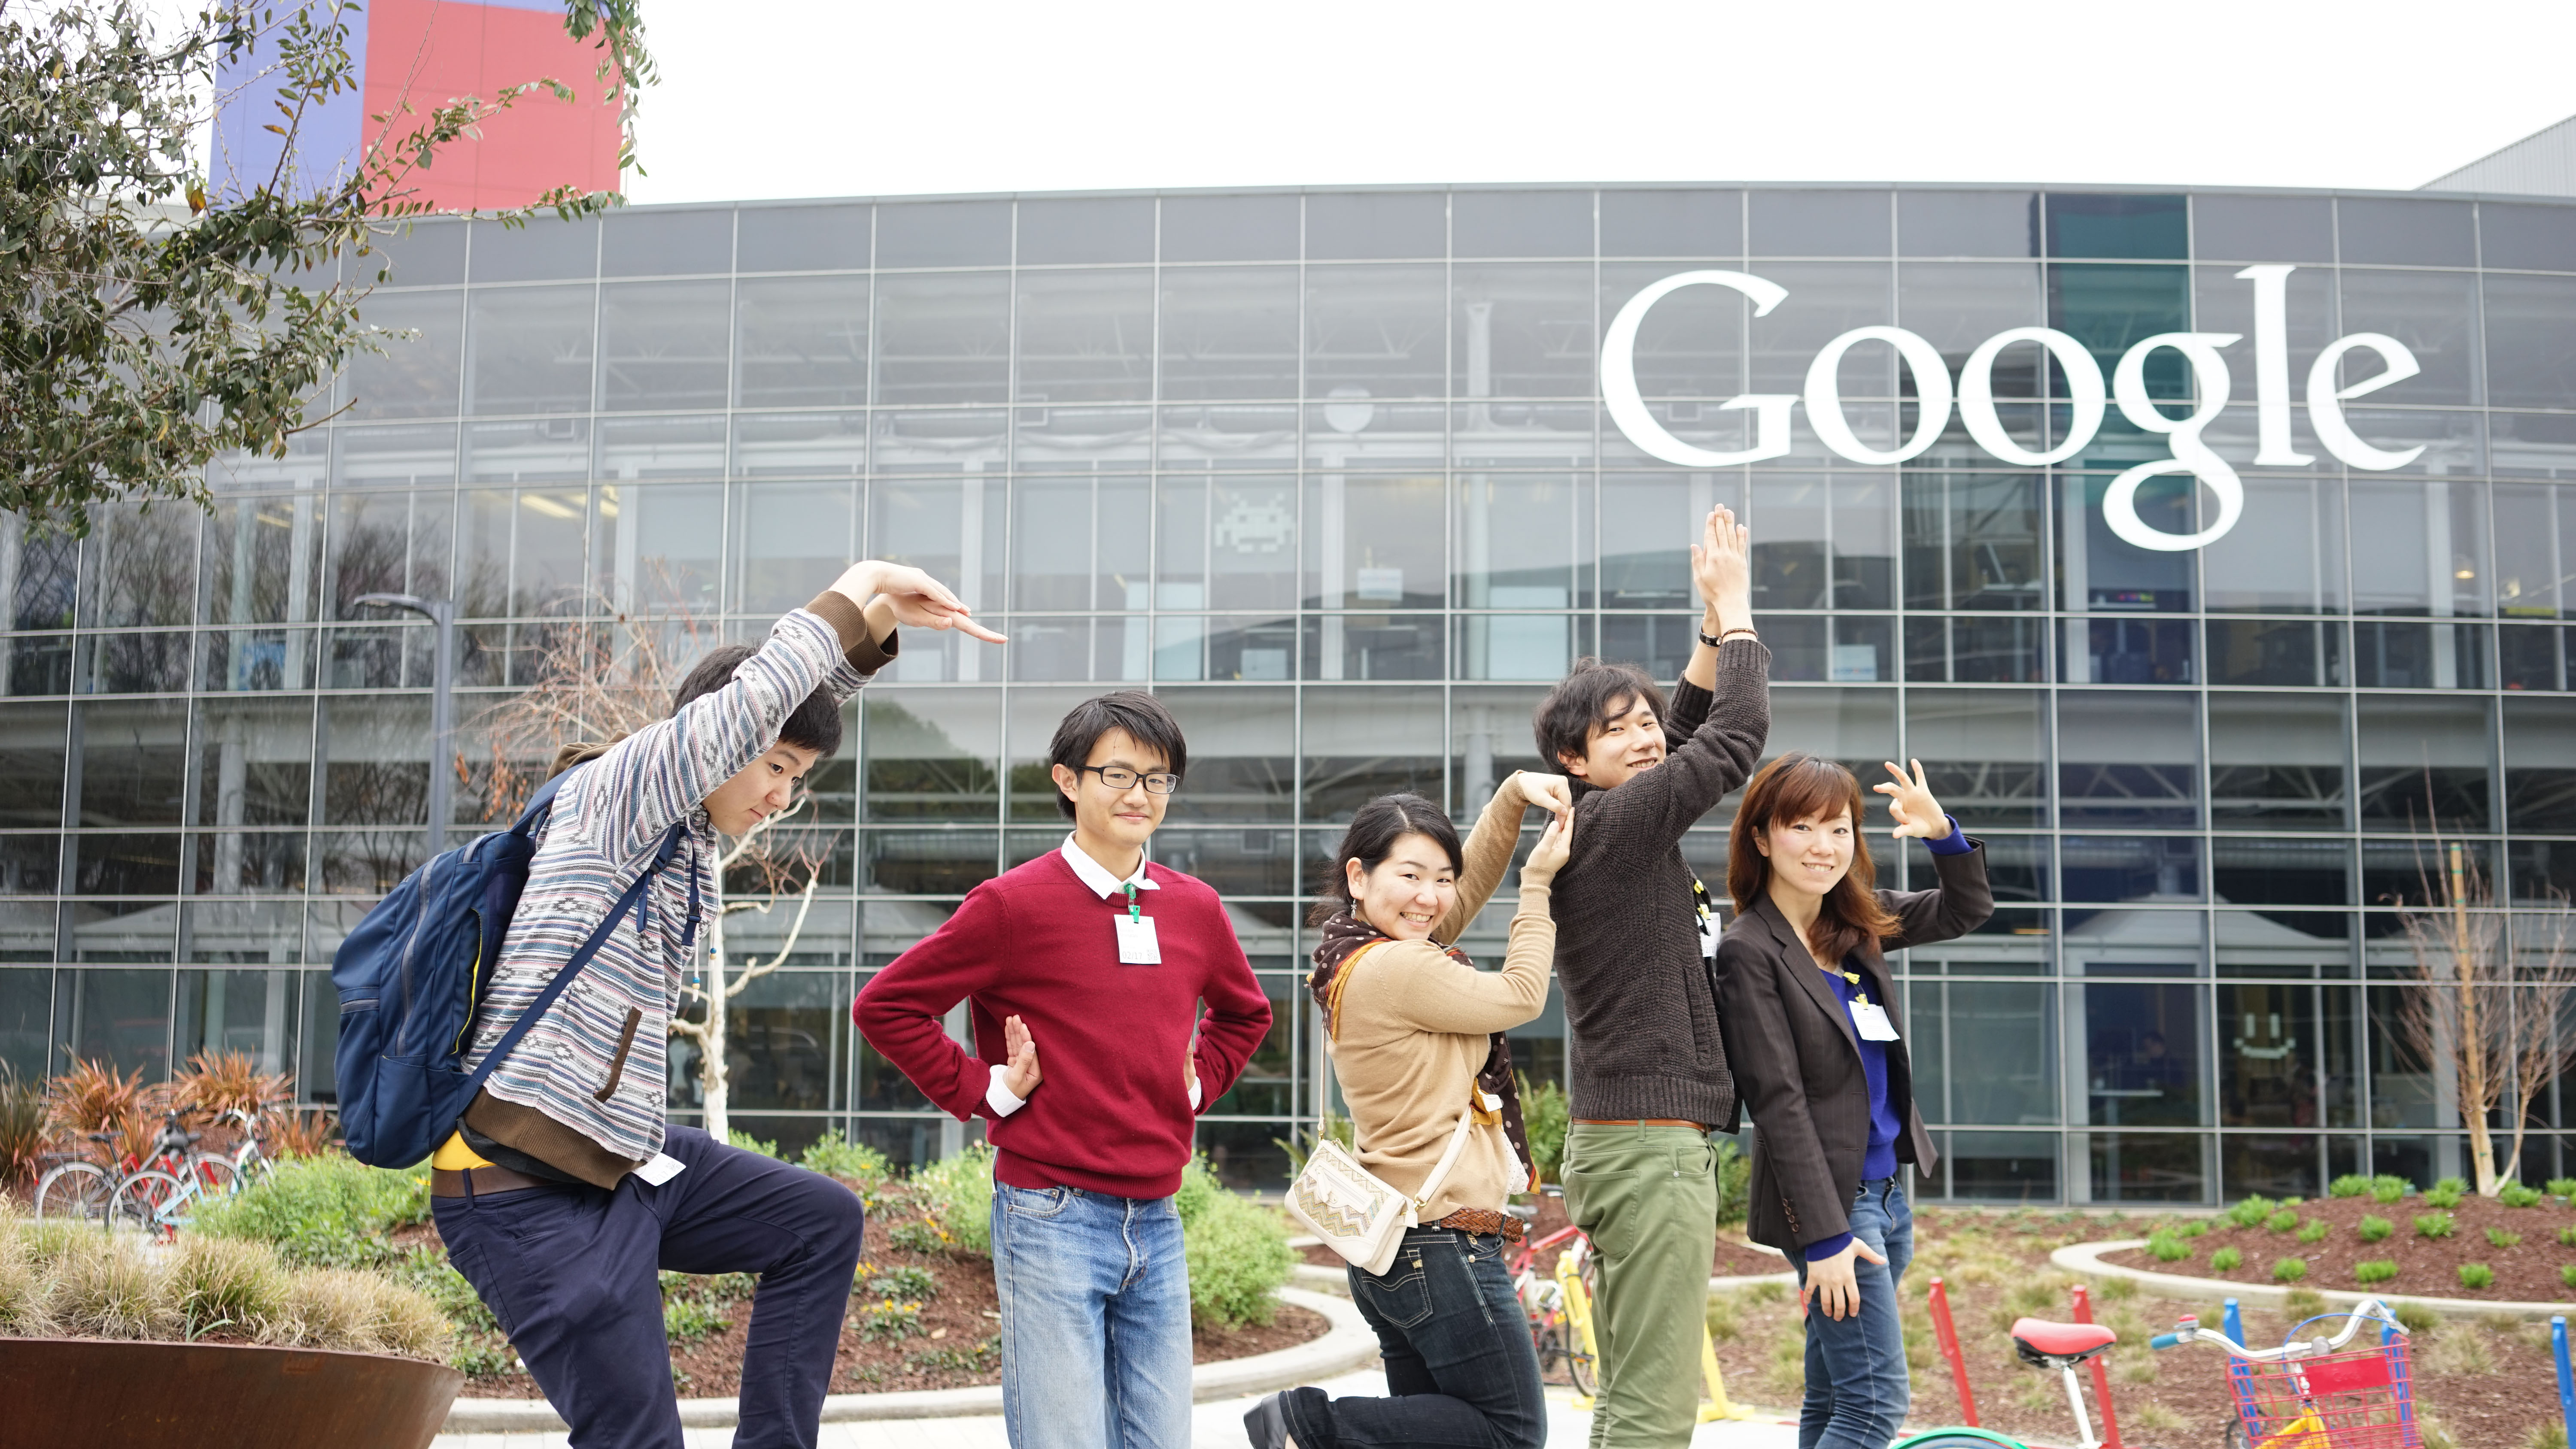 Google(グーグル)ロゴの前で記念撮影